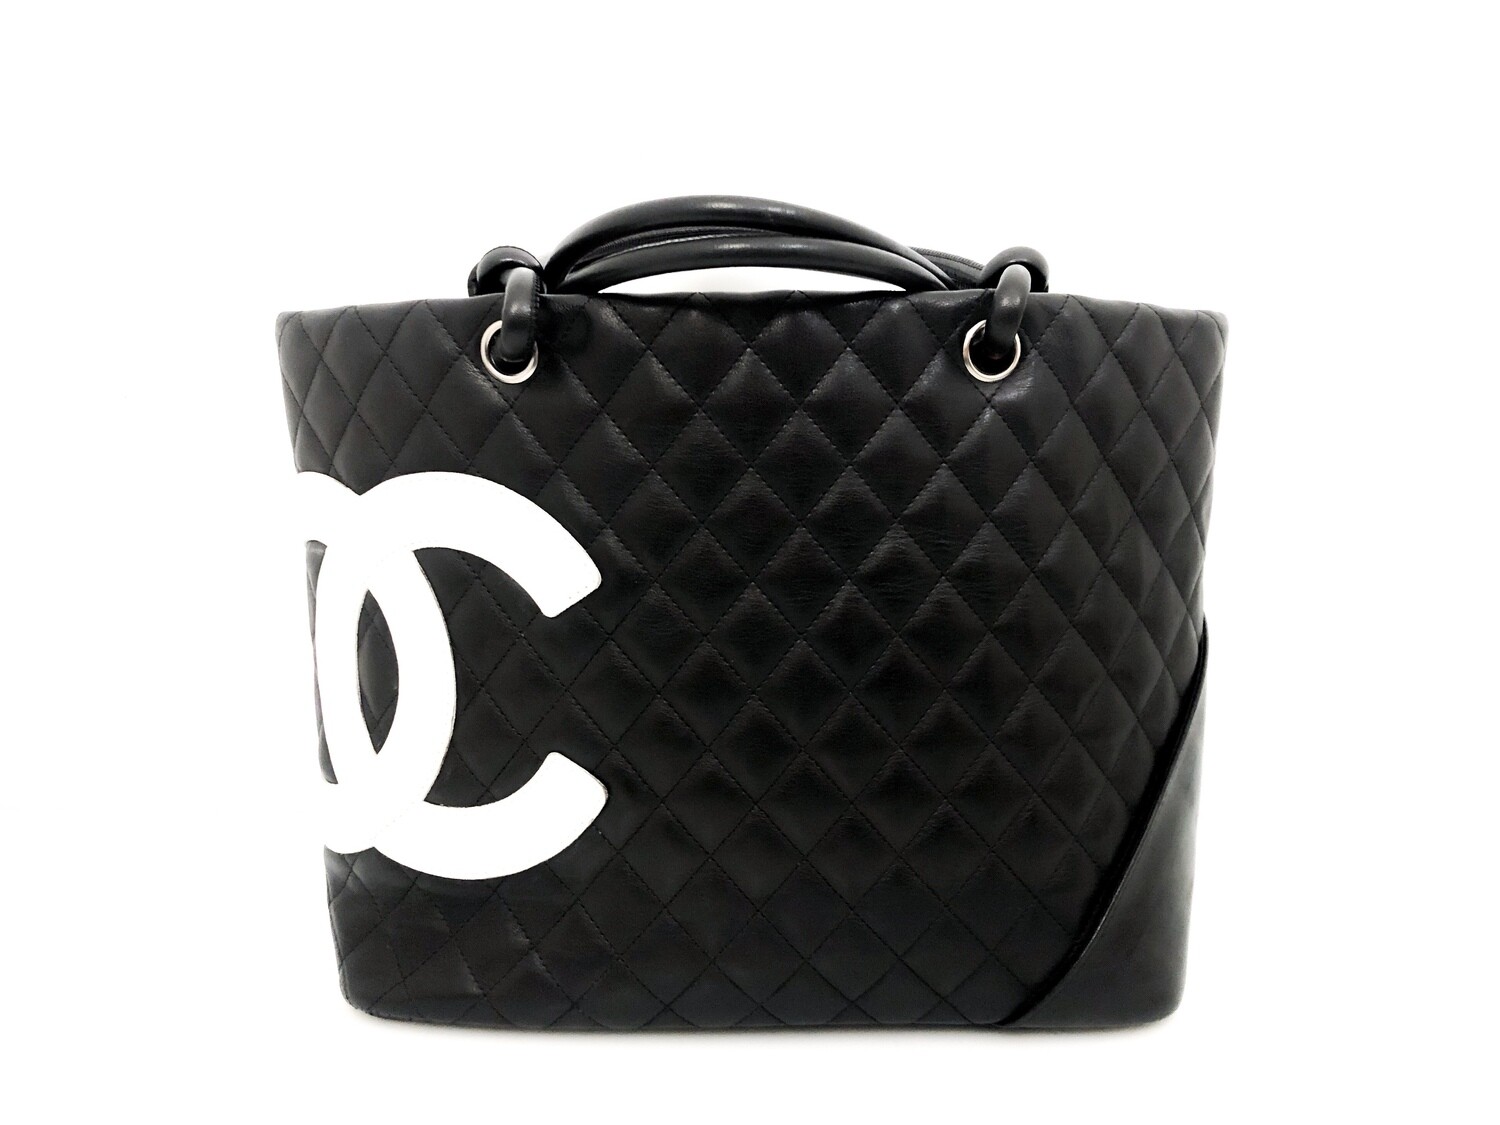 Chanel borsa Cambon grande